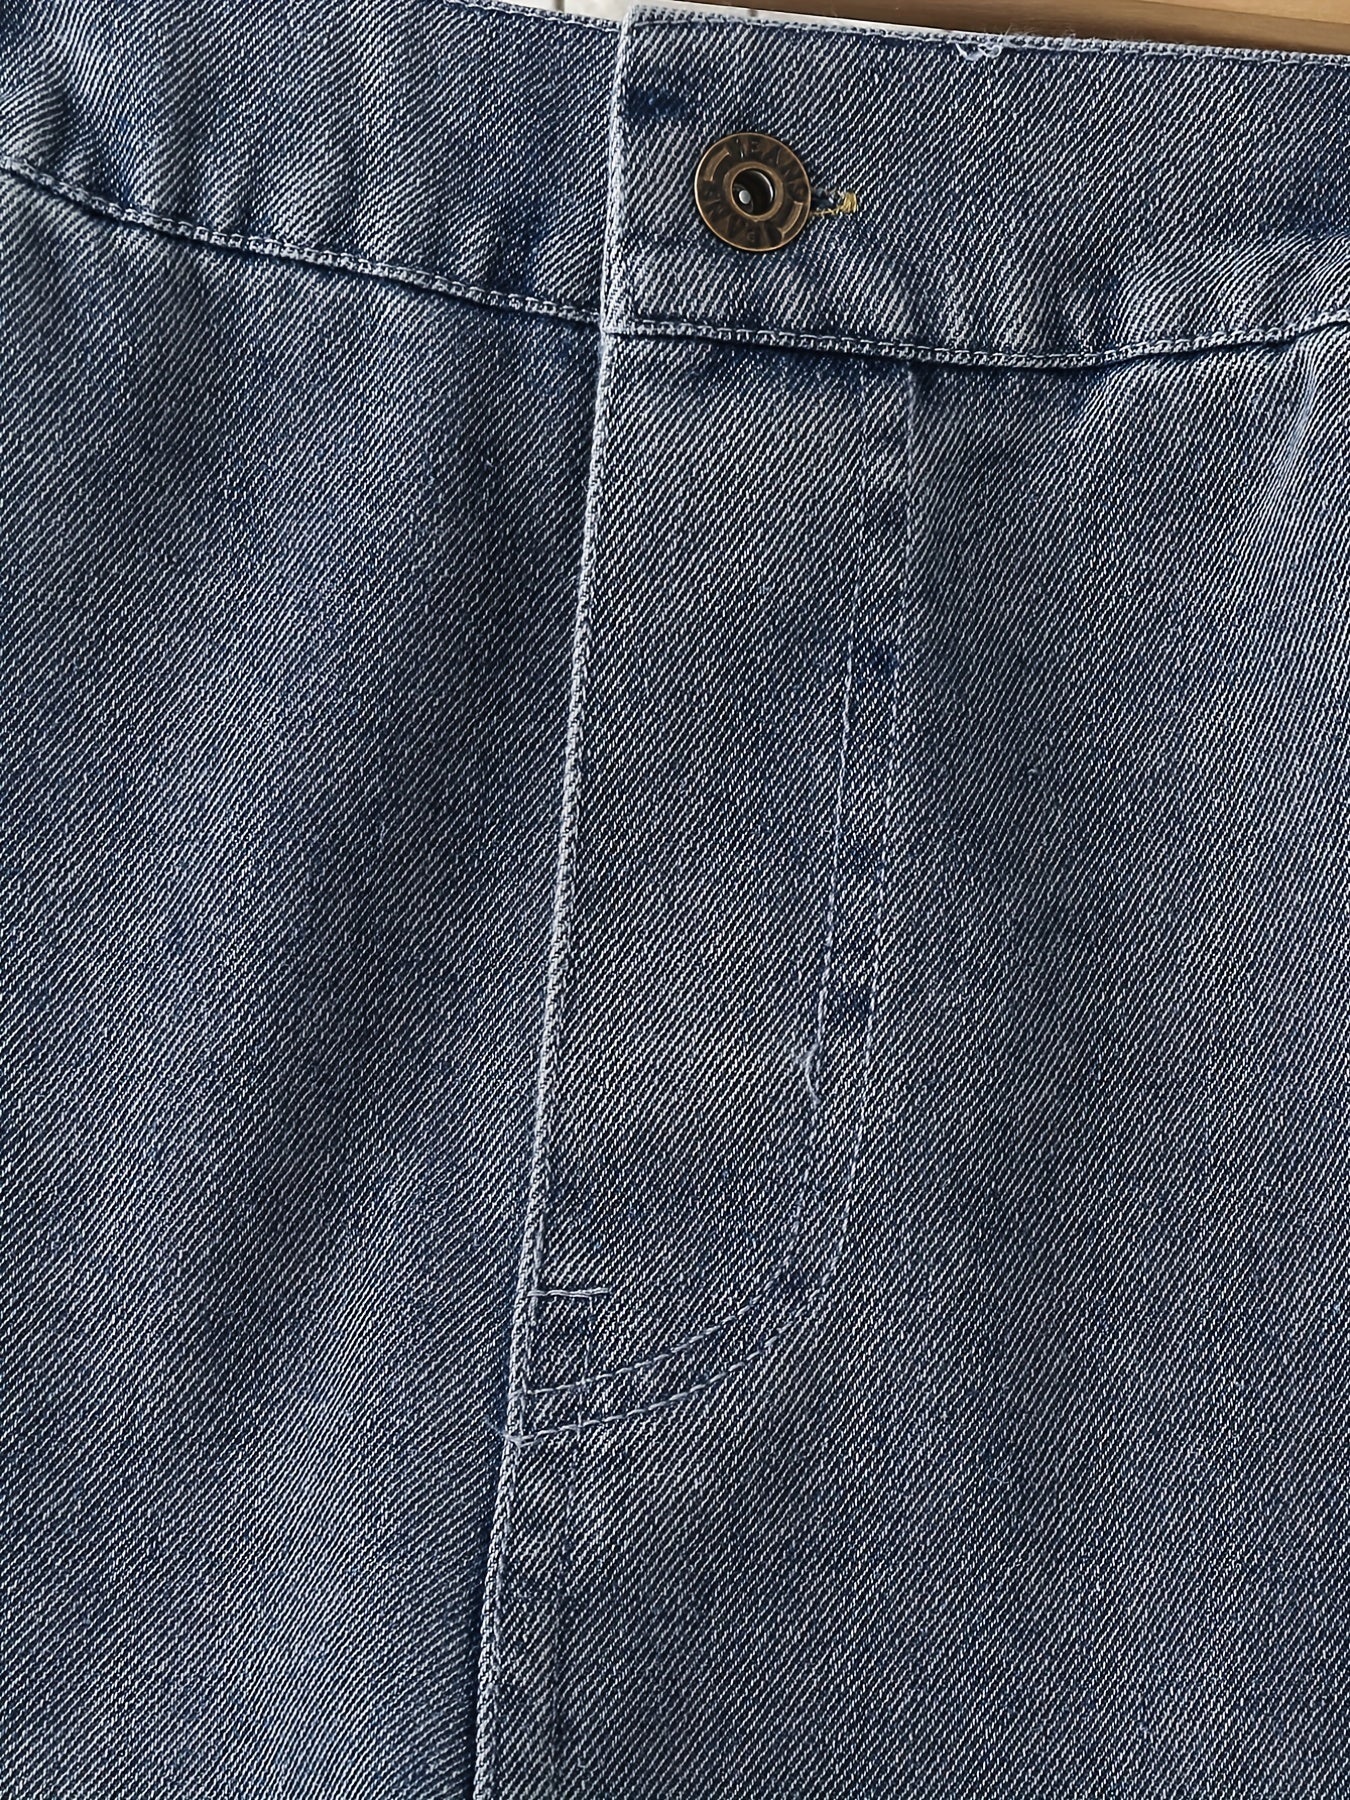 Antmvs Girls' Casual Baggy Fit Cargo Jeans Multi-pocket Versatile Wide Leg Denim Pants